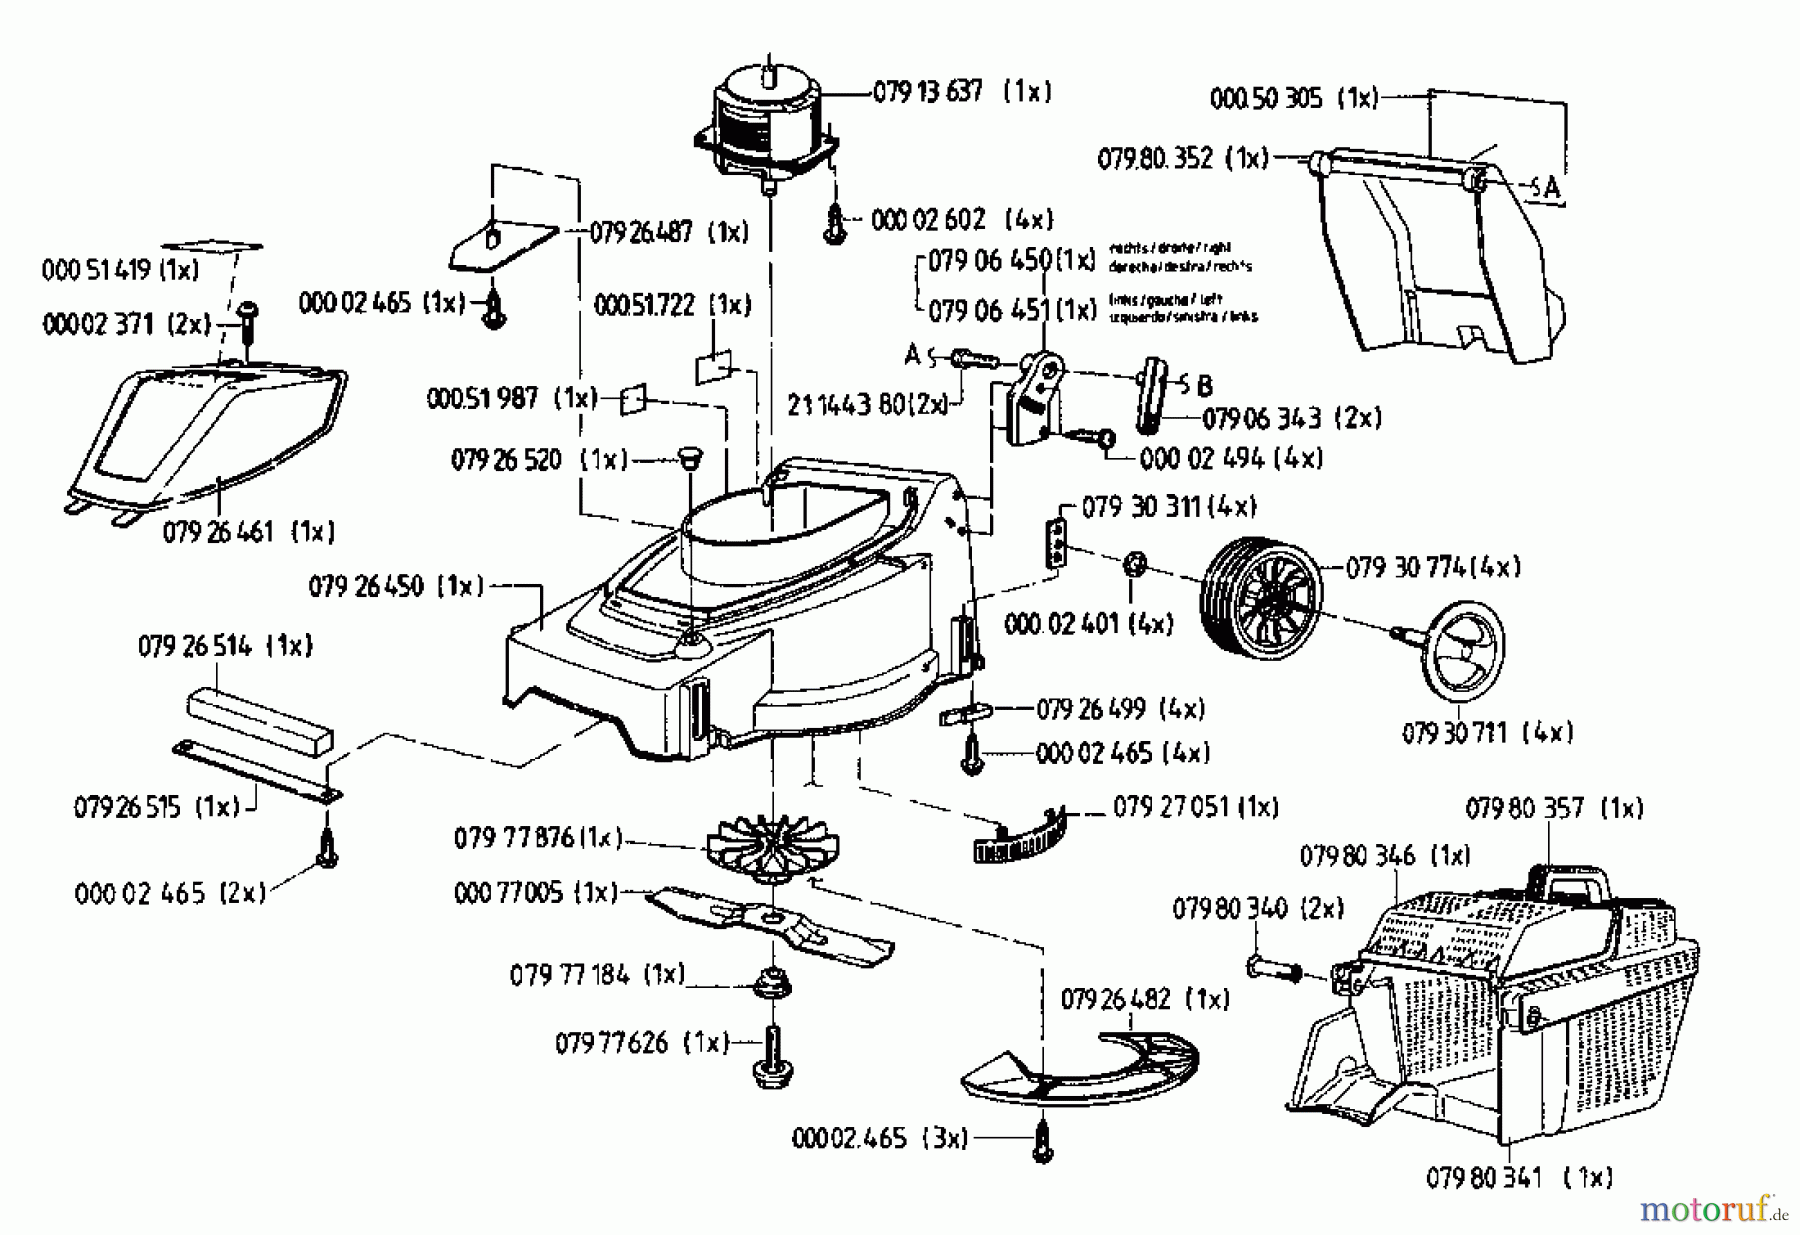  Gutbrod Electric mower HE 33 02821.01  (1996) Basic machine